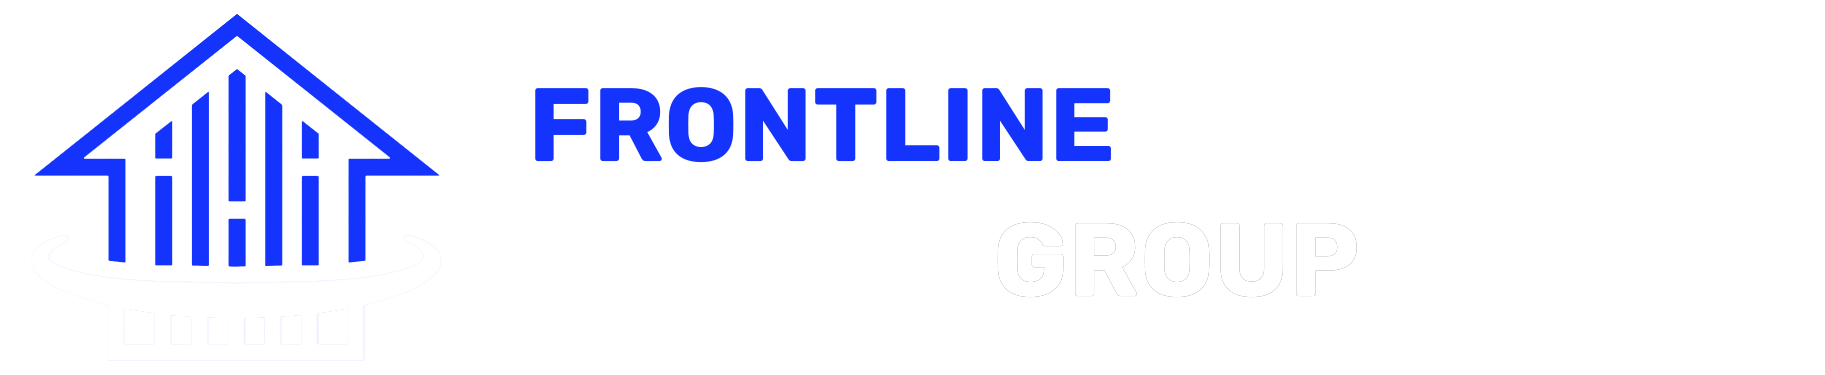 Frontline real estate logo